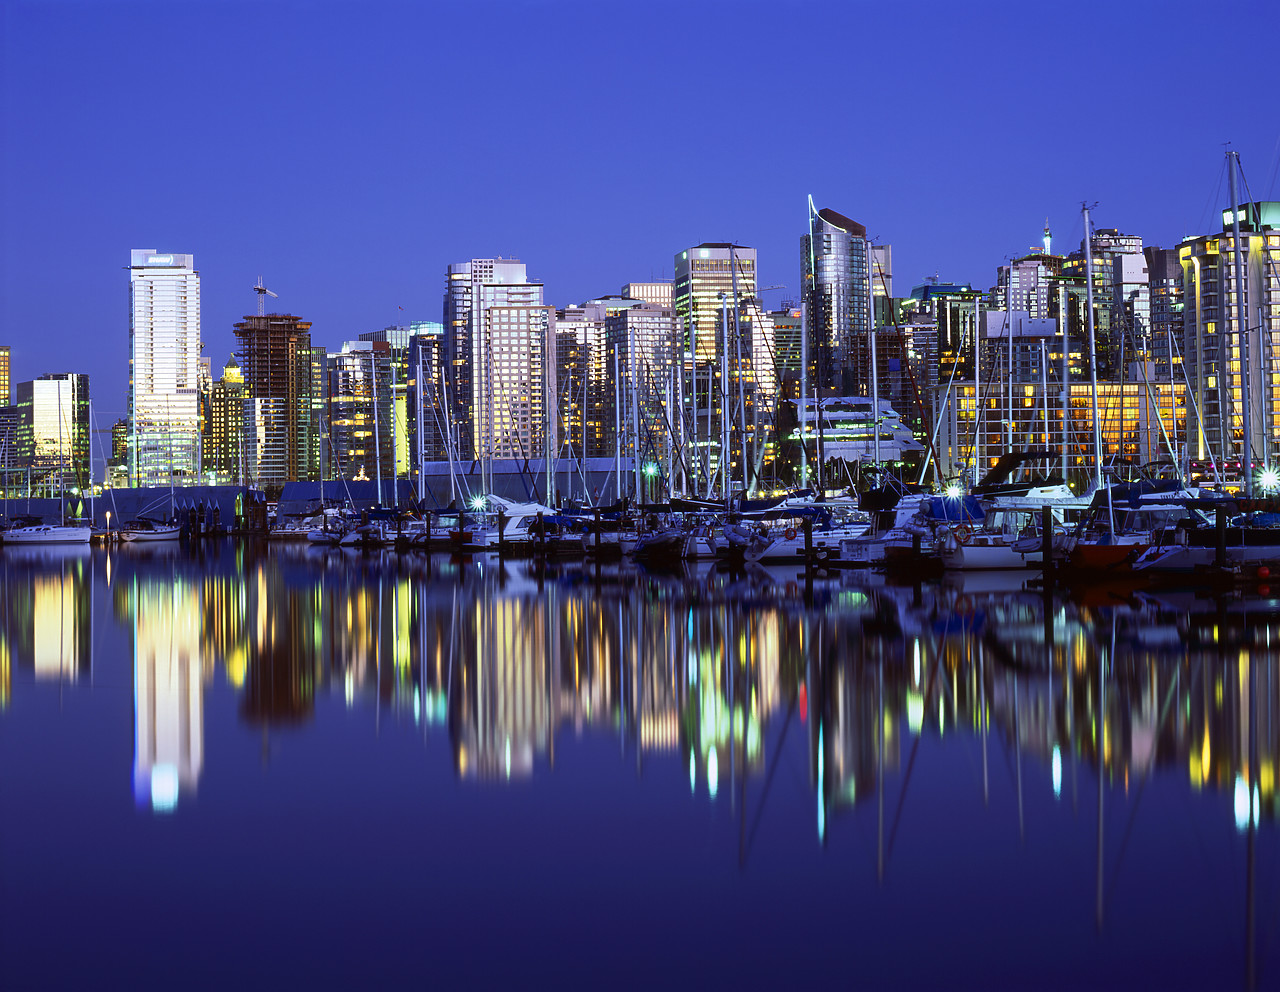 #070420-1 - Vancouver Skyline at Twilight, British Columbia, Canada